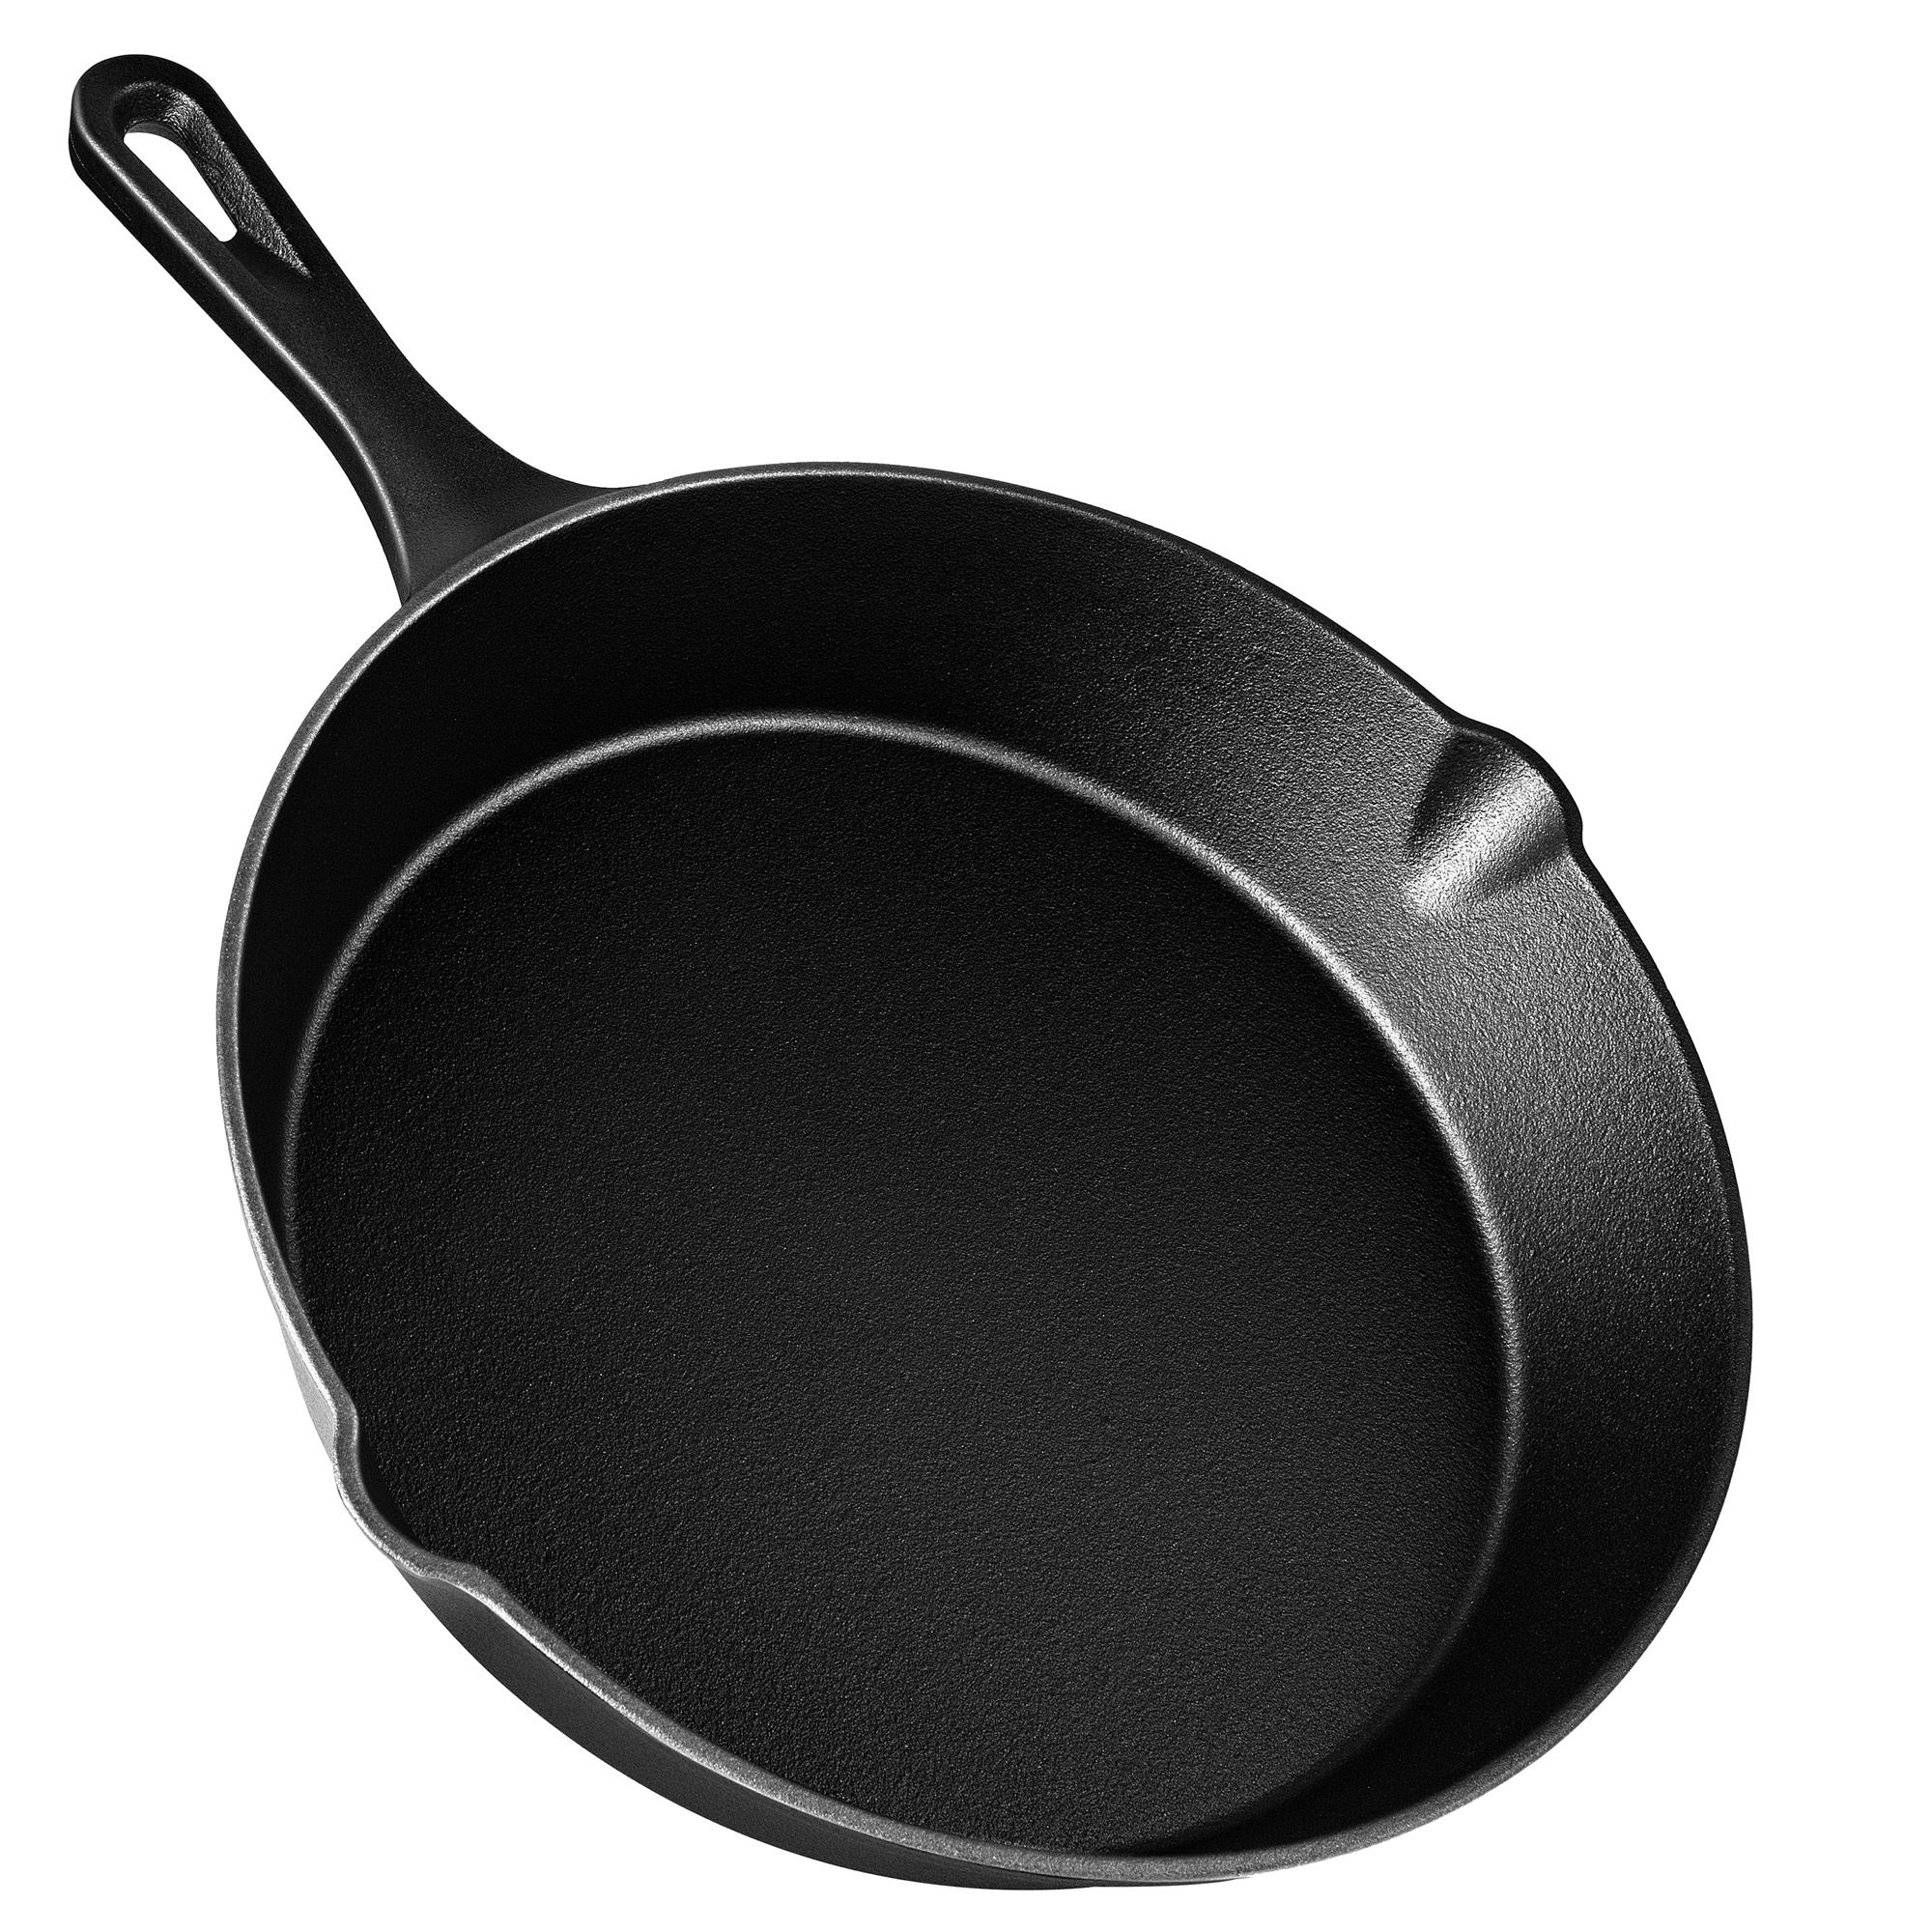 VonShef Cast Iron Skillet Pan | Black Pre-Seasoned | 25cm | 10 inch Frying Pan